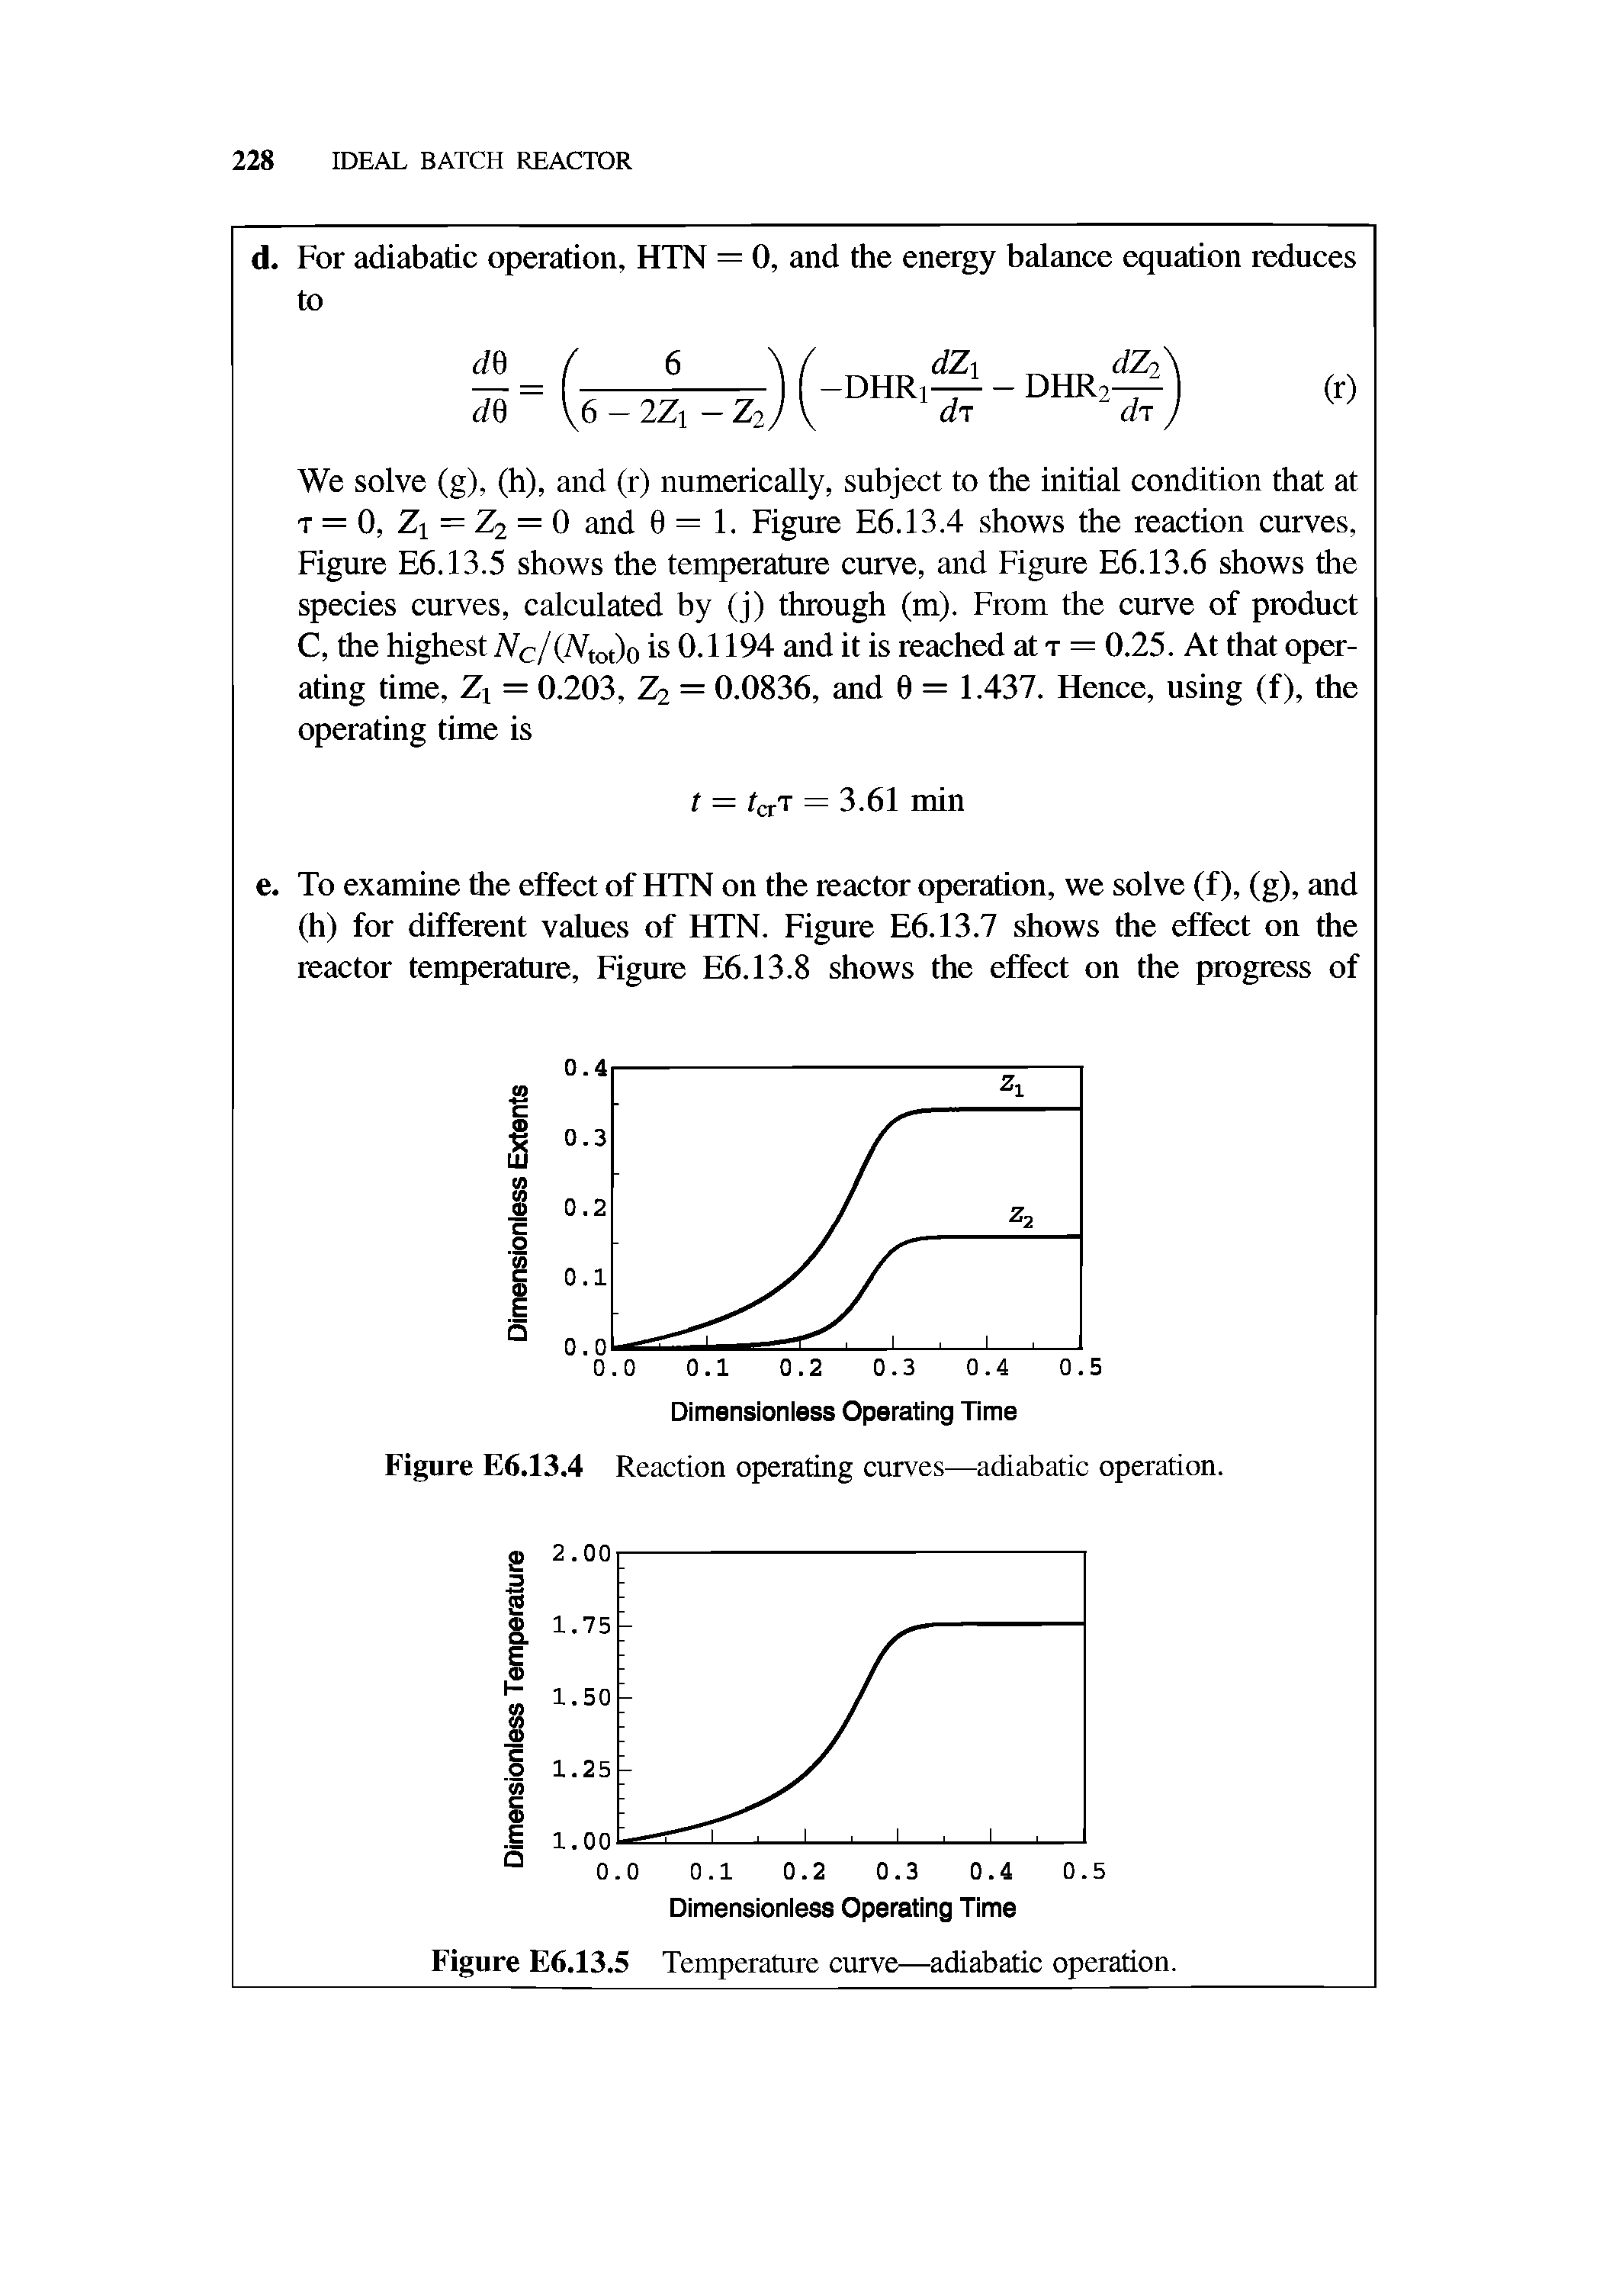 Figure E6.13.4 Reaction operating curves—adiabatic operation.